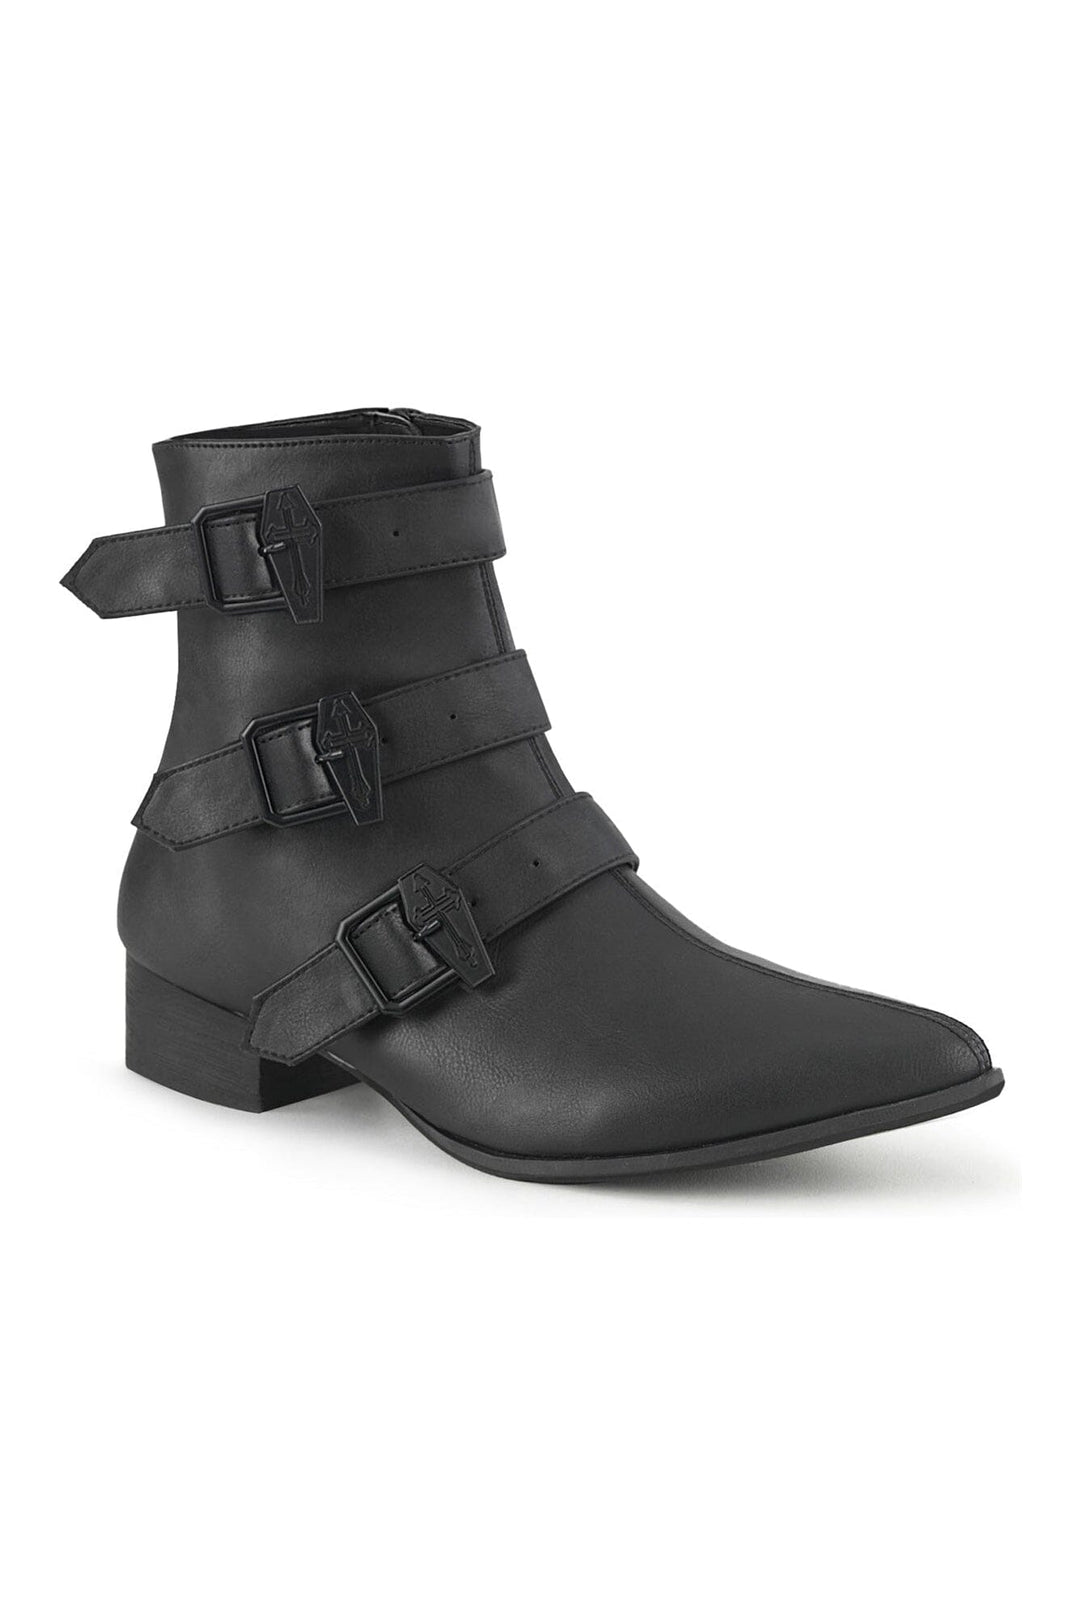 WARLOCK-50-C Black Vegan Leather Ankle Boot-Ankle Boots-Demonia-Black-10-Vegan Leather-SEXYSHOES.COM